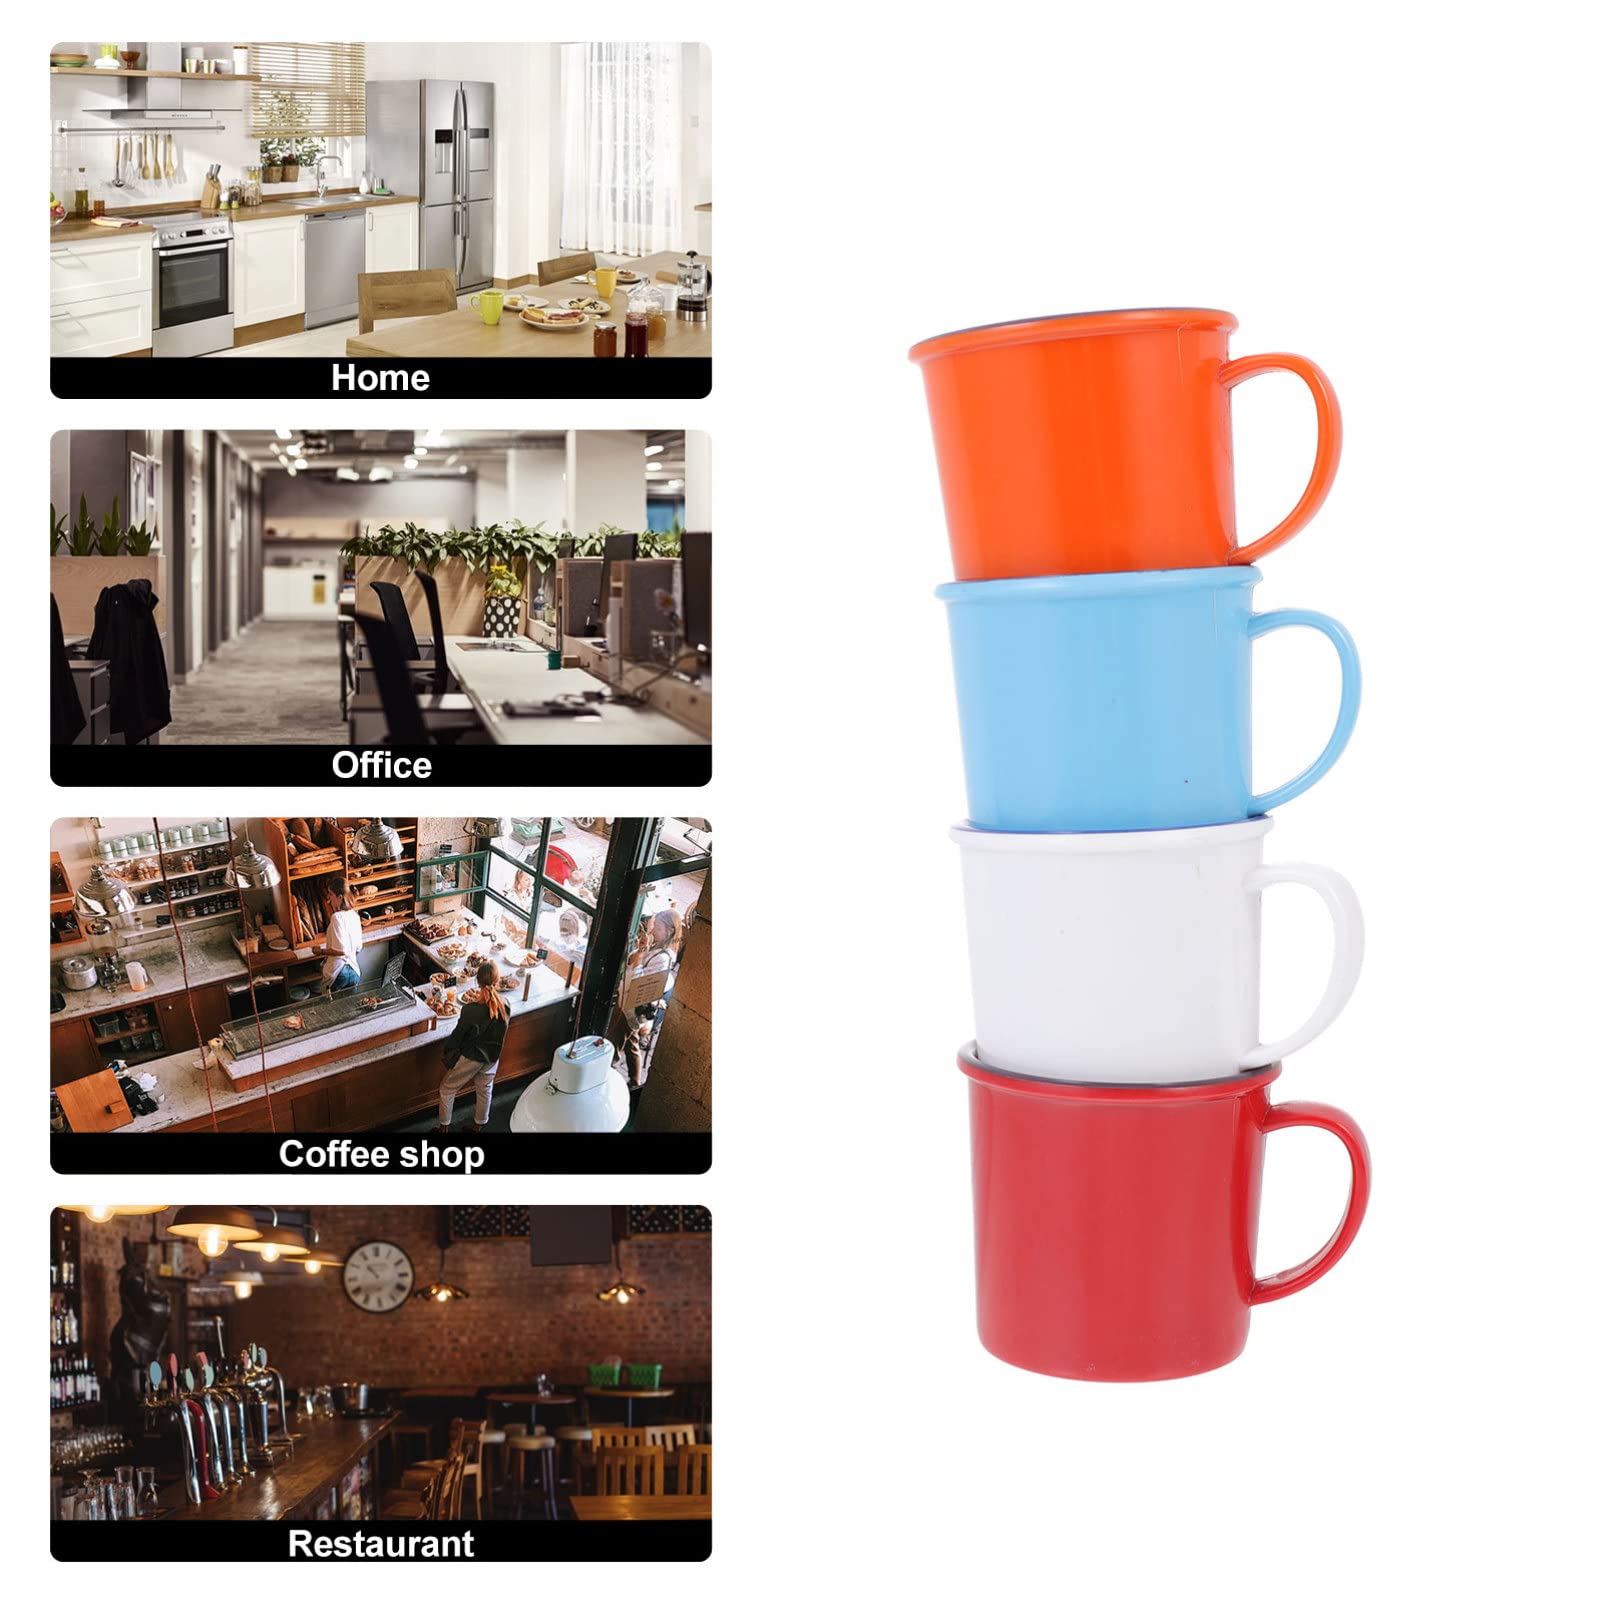 YARDWE Tea Coffee Mug Cup Set: 4Pcs Melamine Faux Enamel Mugs Drinking Cups for Hot Chocolate Tea Travel Camping Outdoor Indoor Home Use